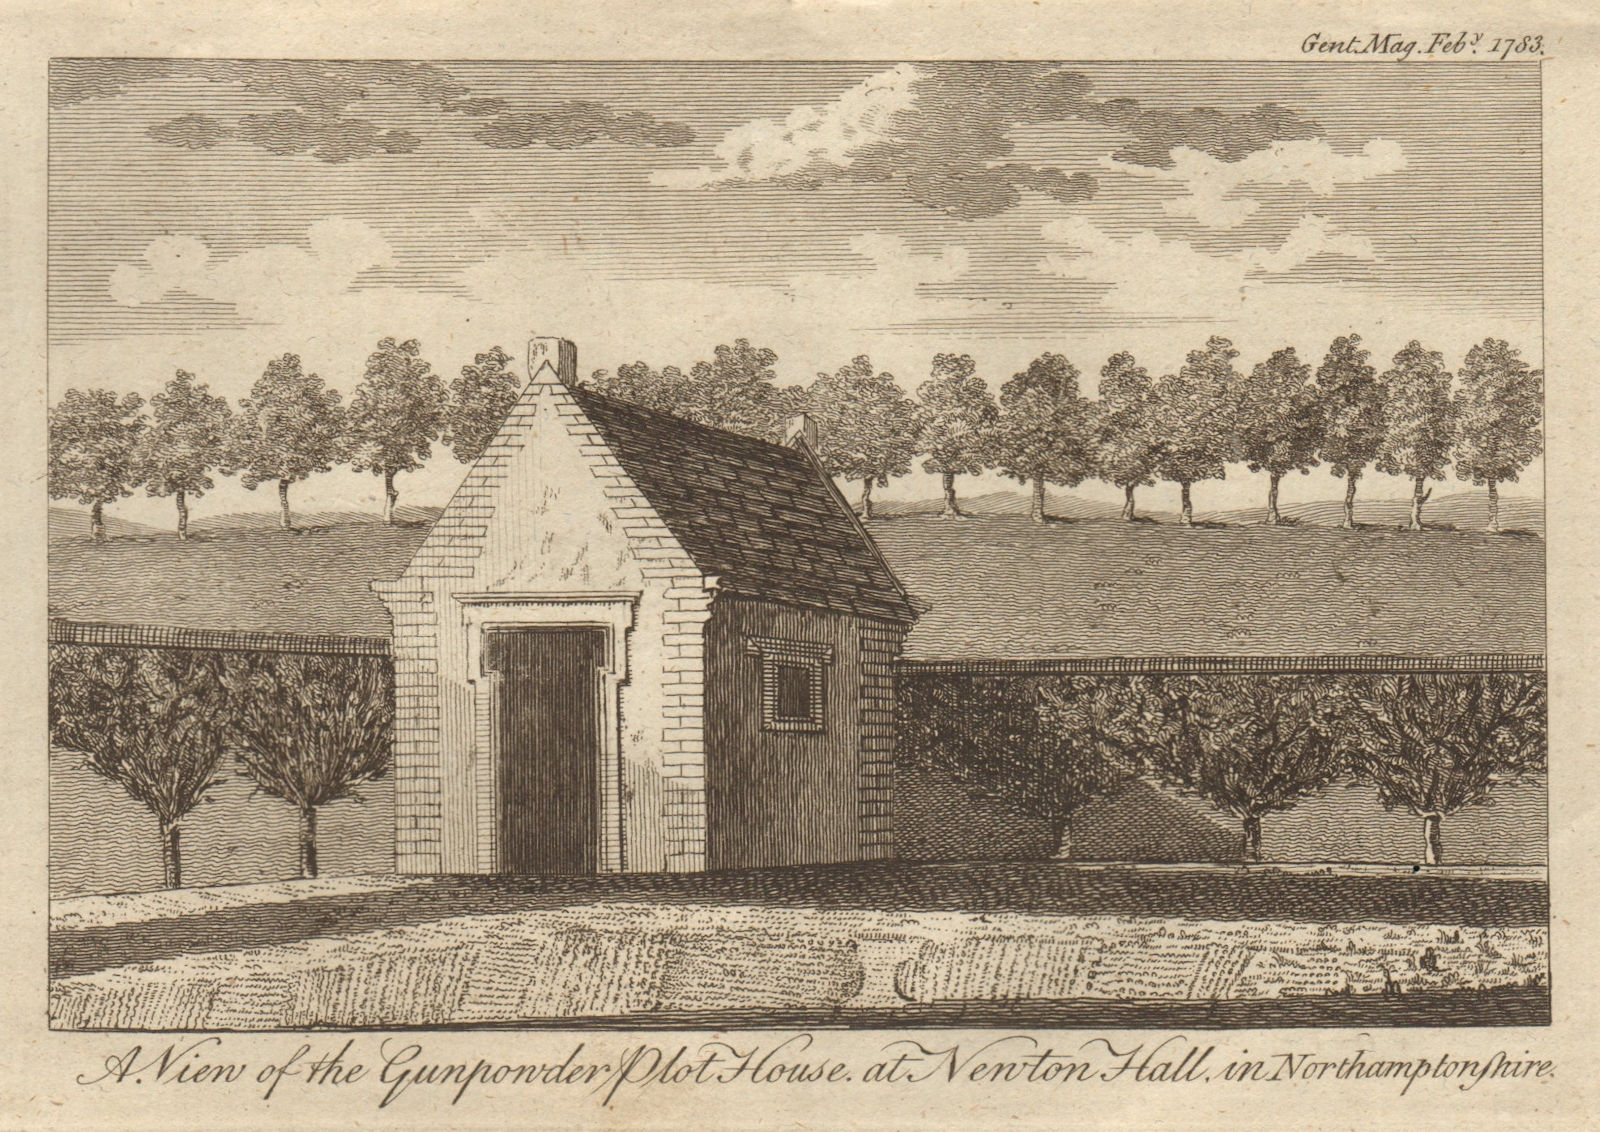 Associate Product Gunpower Plot House, Newton Hall, Northamptonshire. Newton Rebellion, 1607 1783